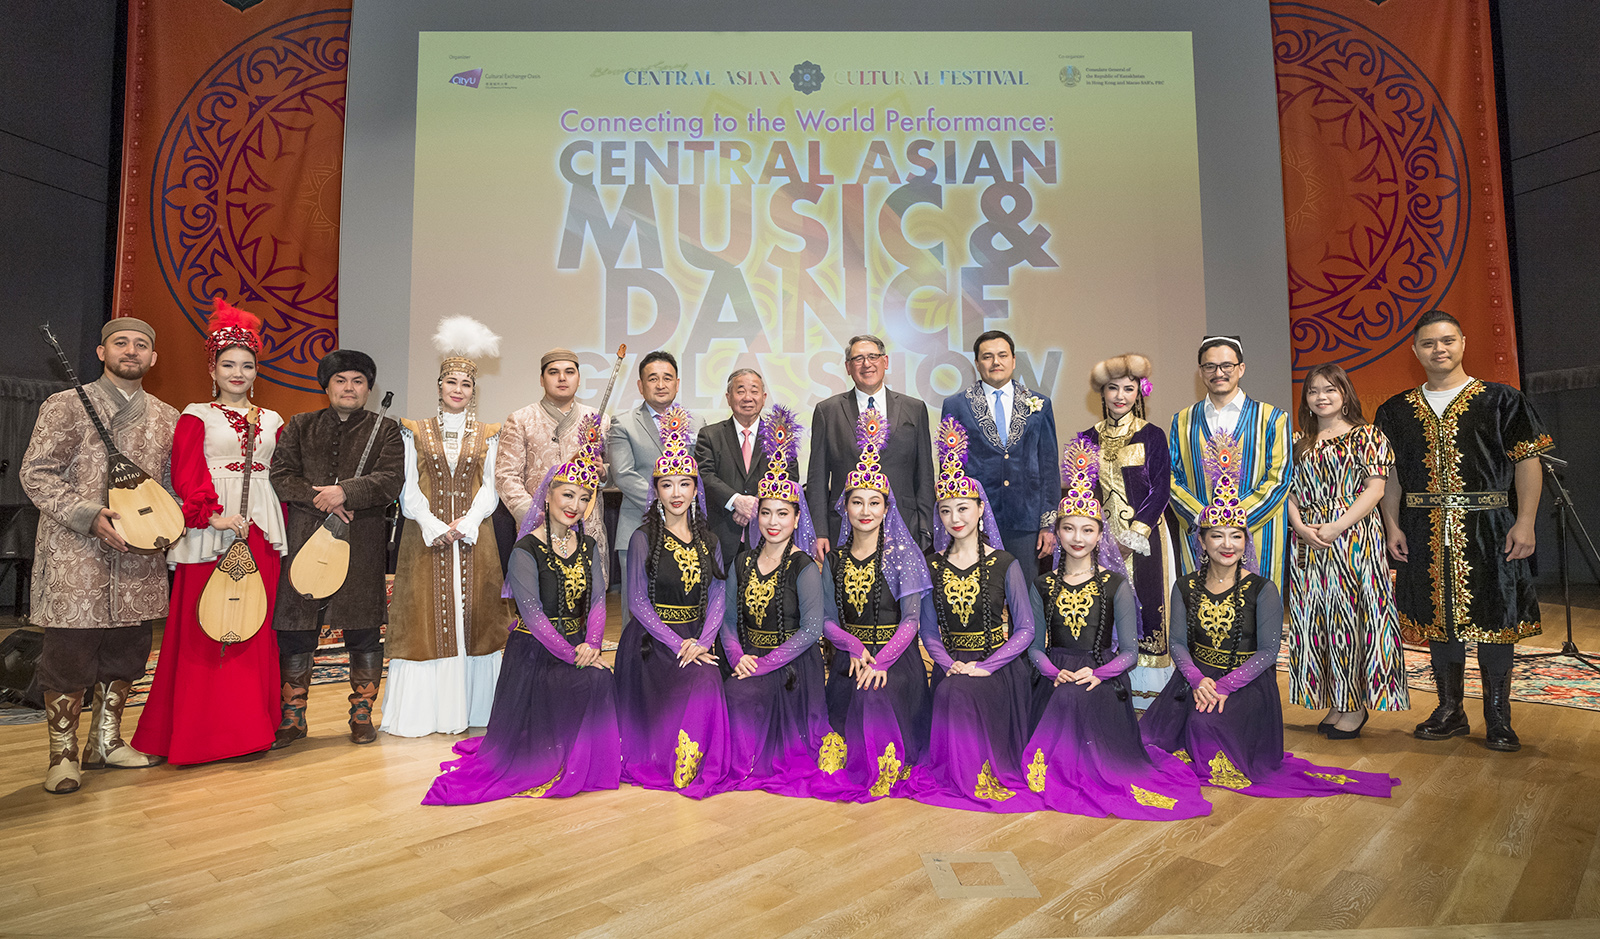 CityUHK embraces cultural diversity and celebrates Central Asian Festival